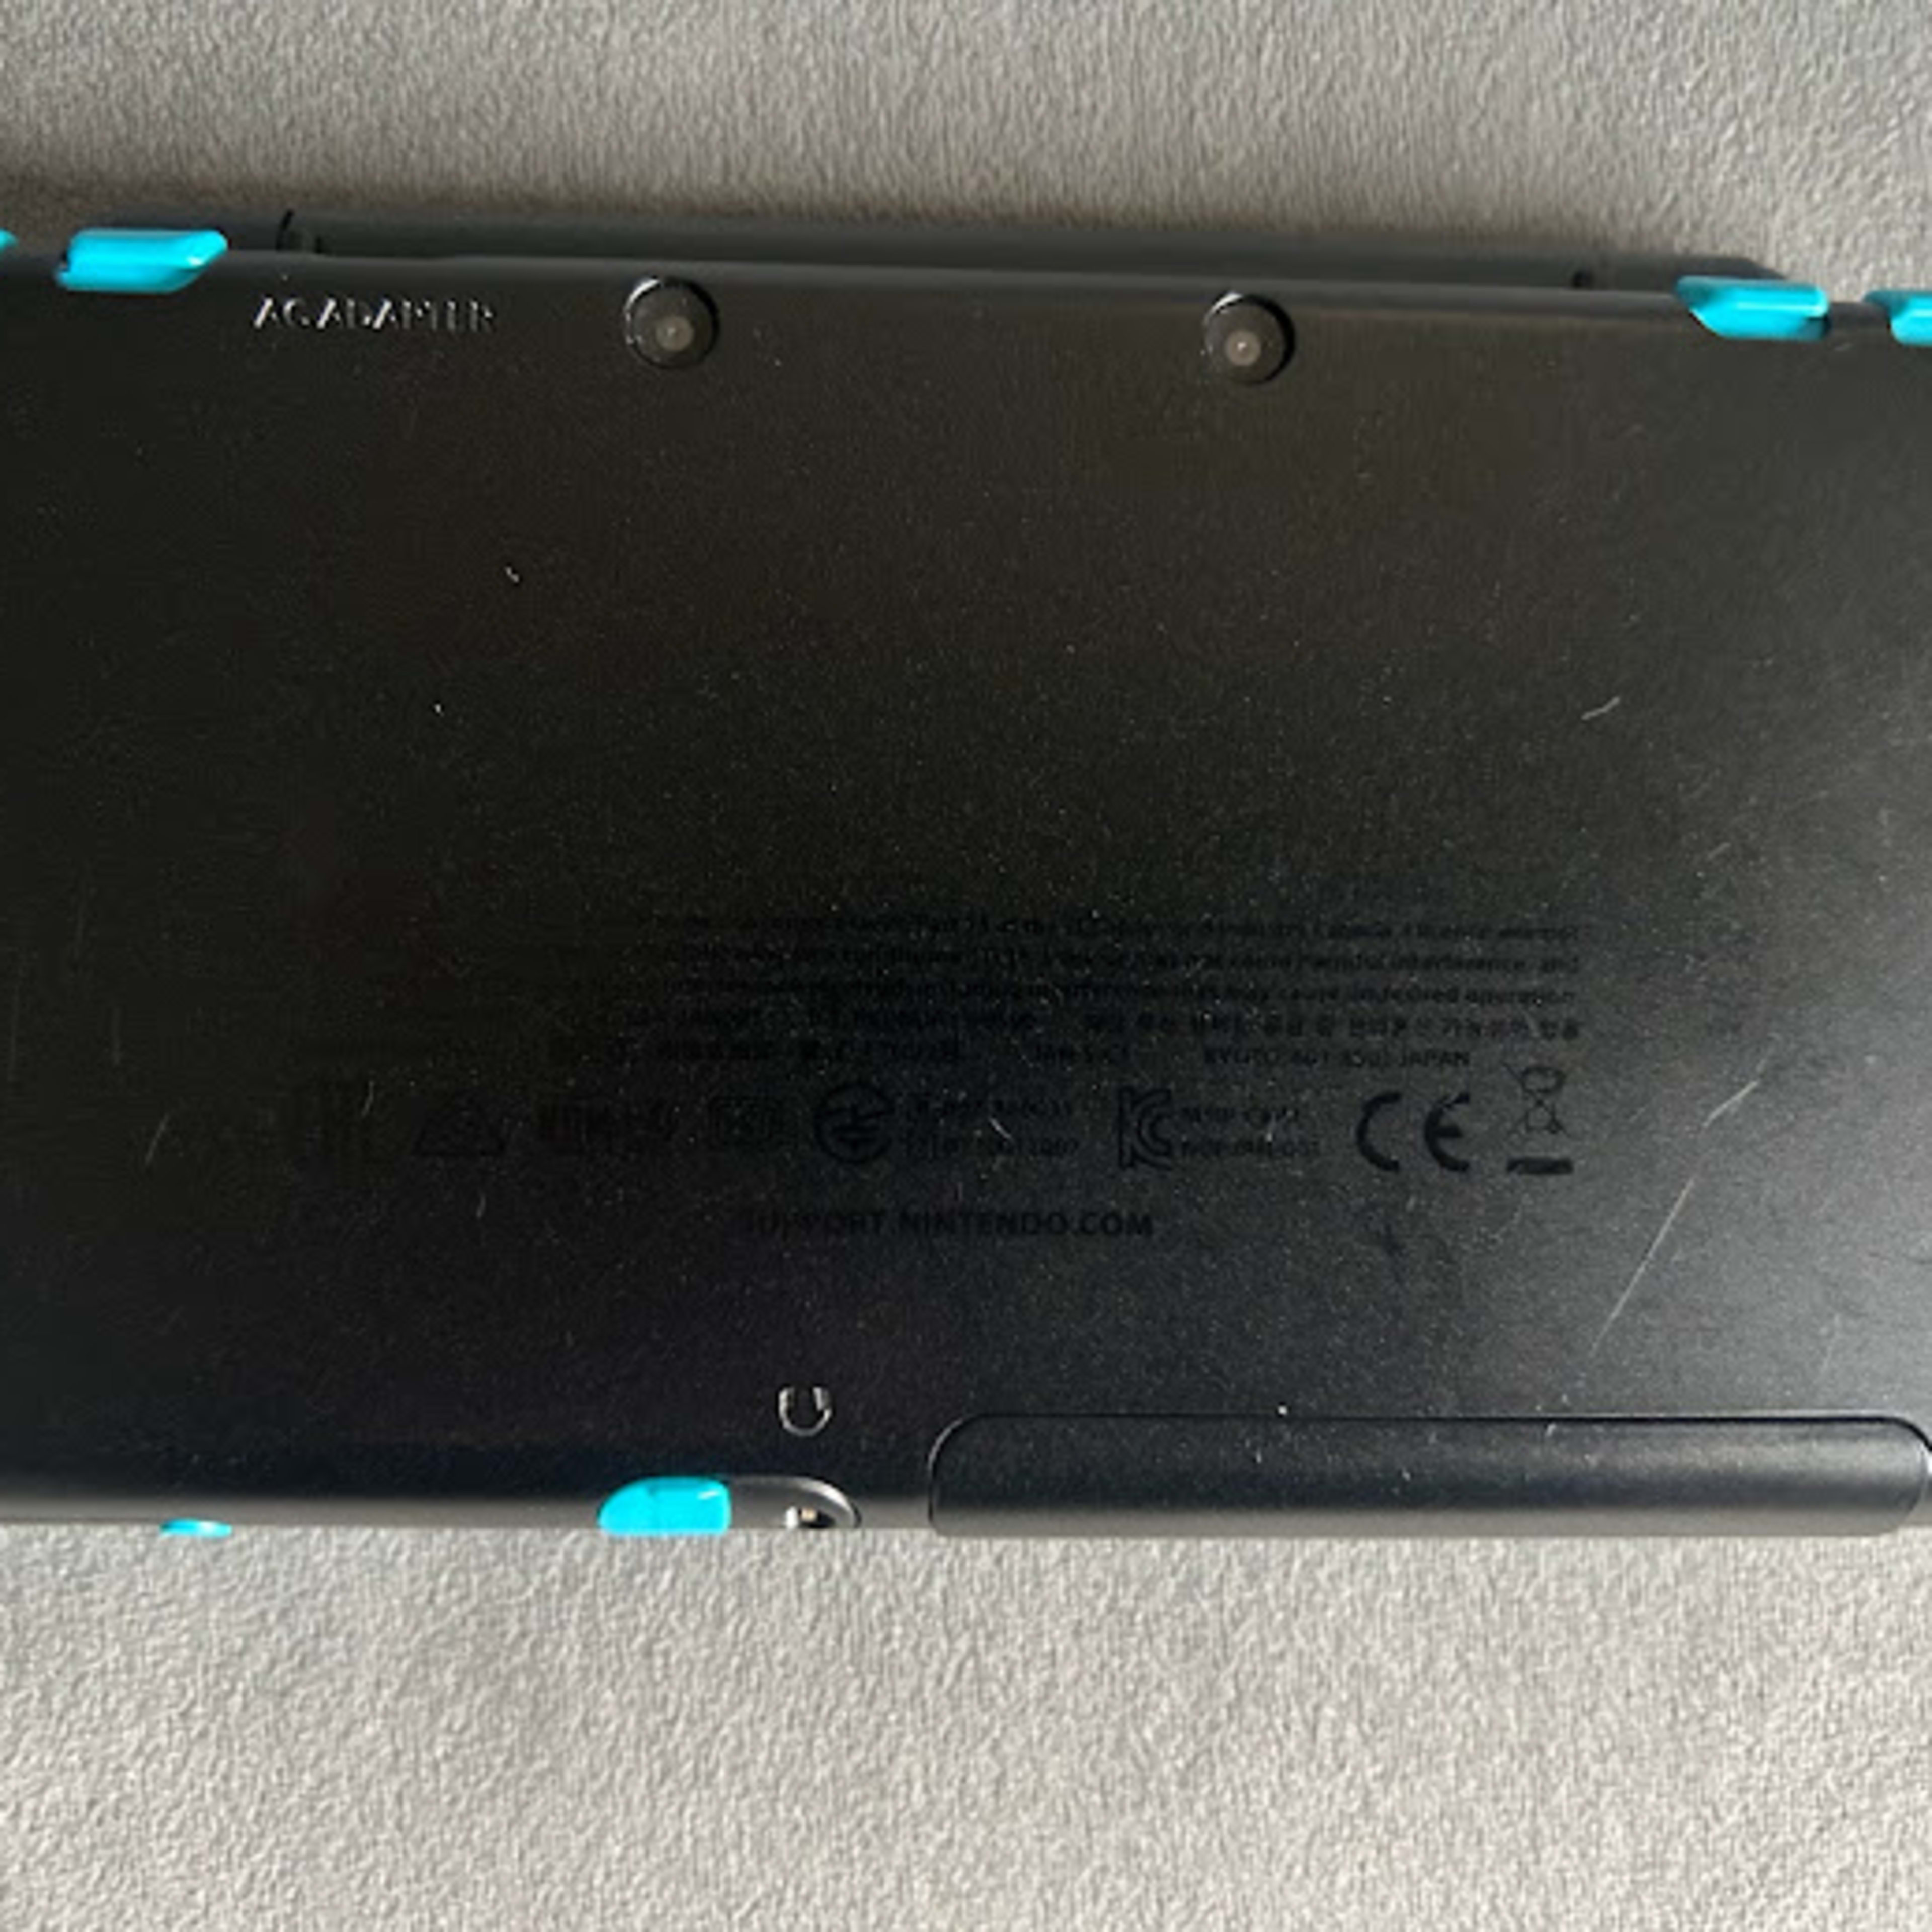 Nintendo New 2DS XL - Black / Turquoise